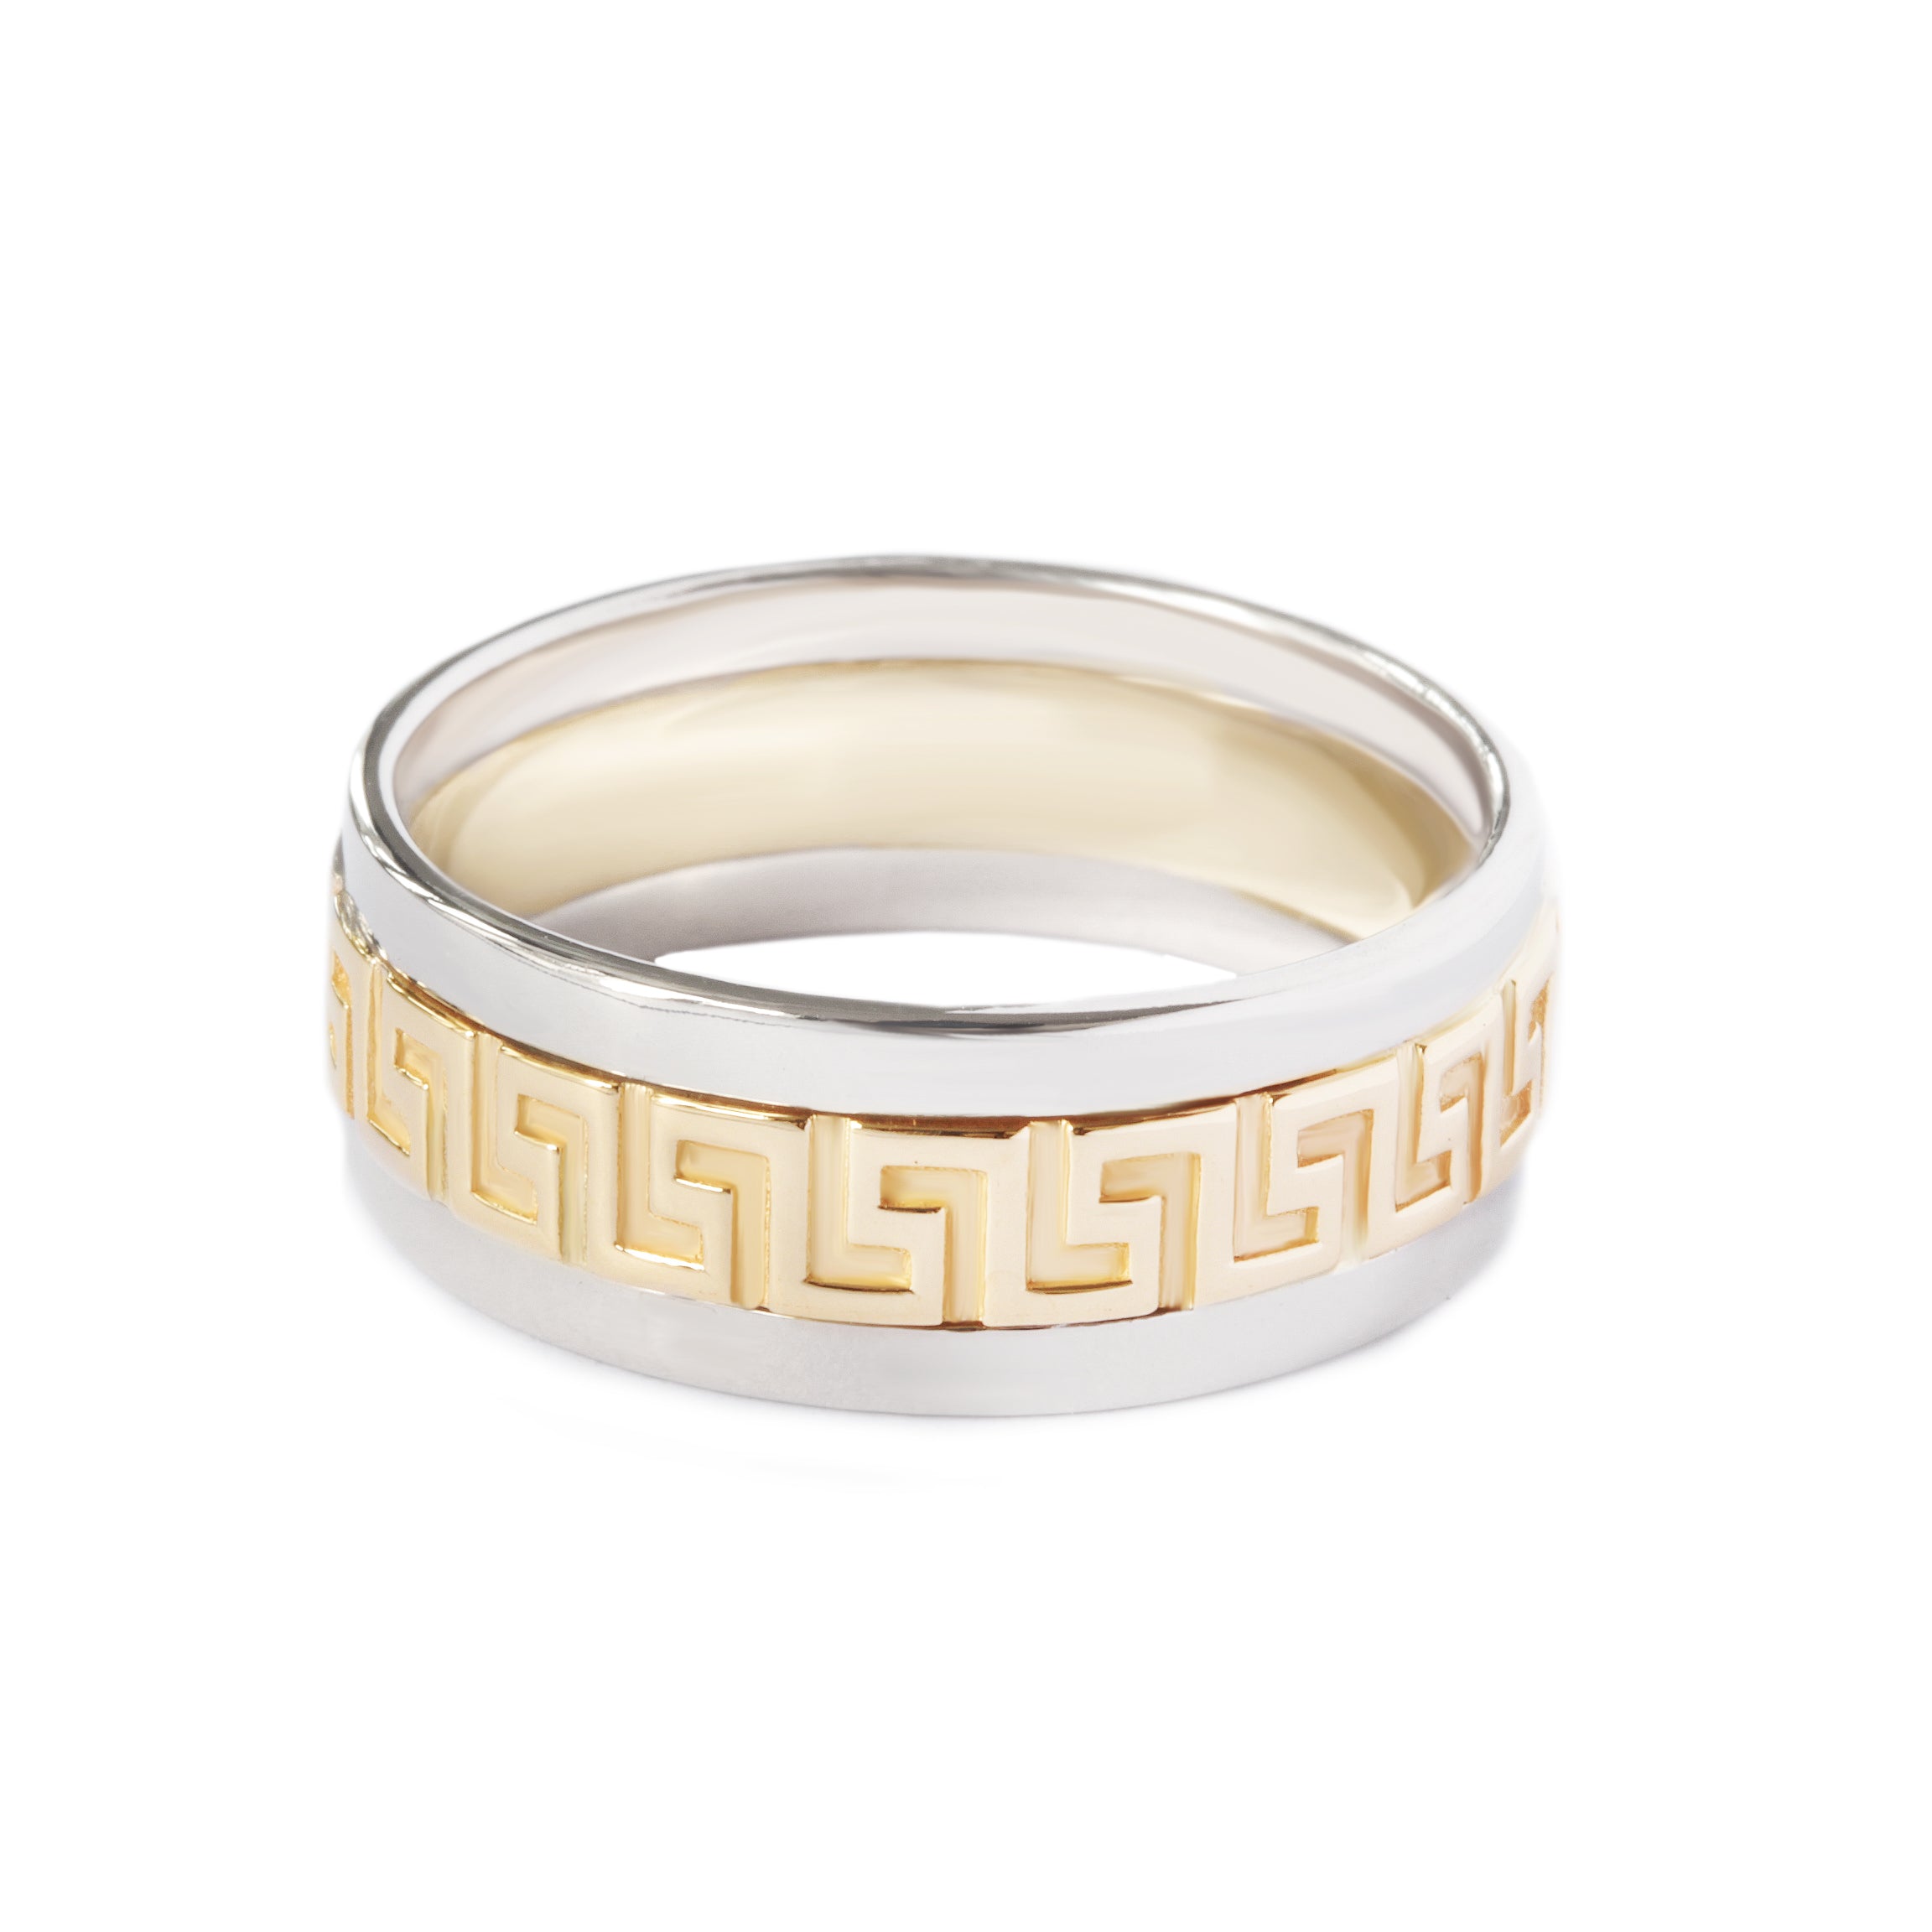 Two Tone Gold Greek Key Design Wedding Ring